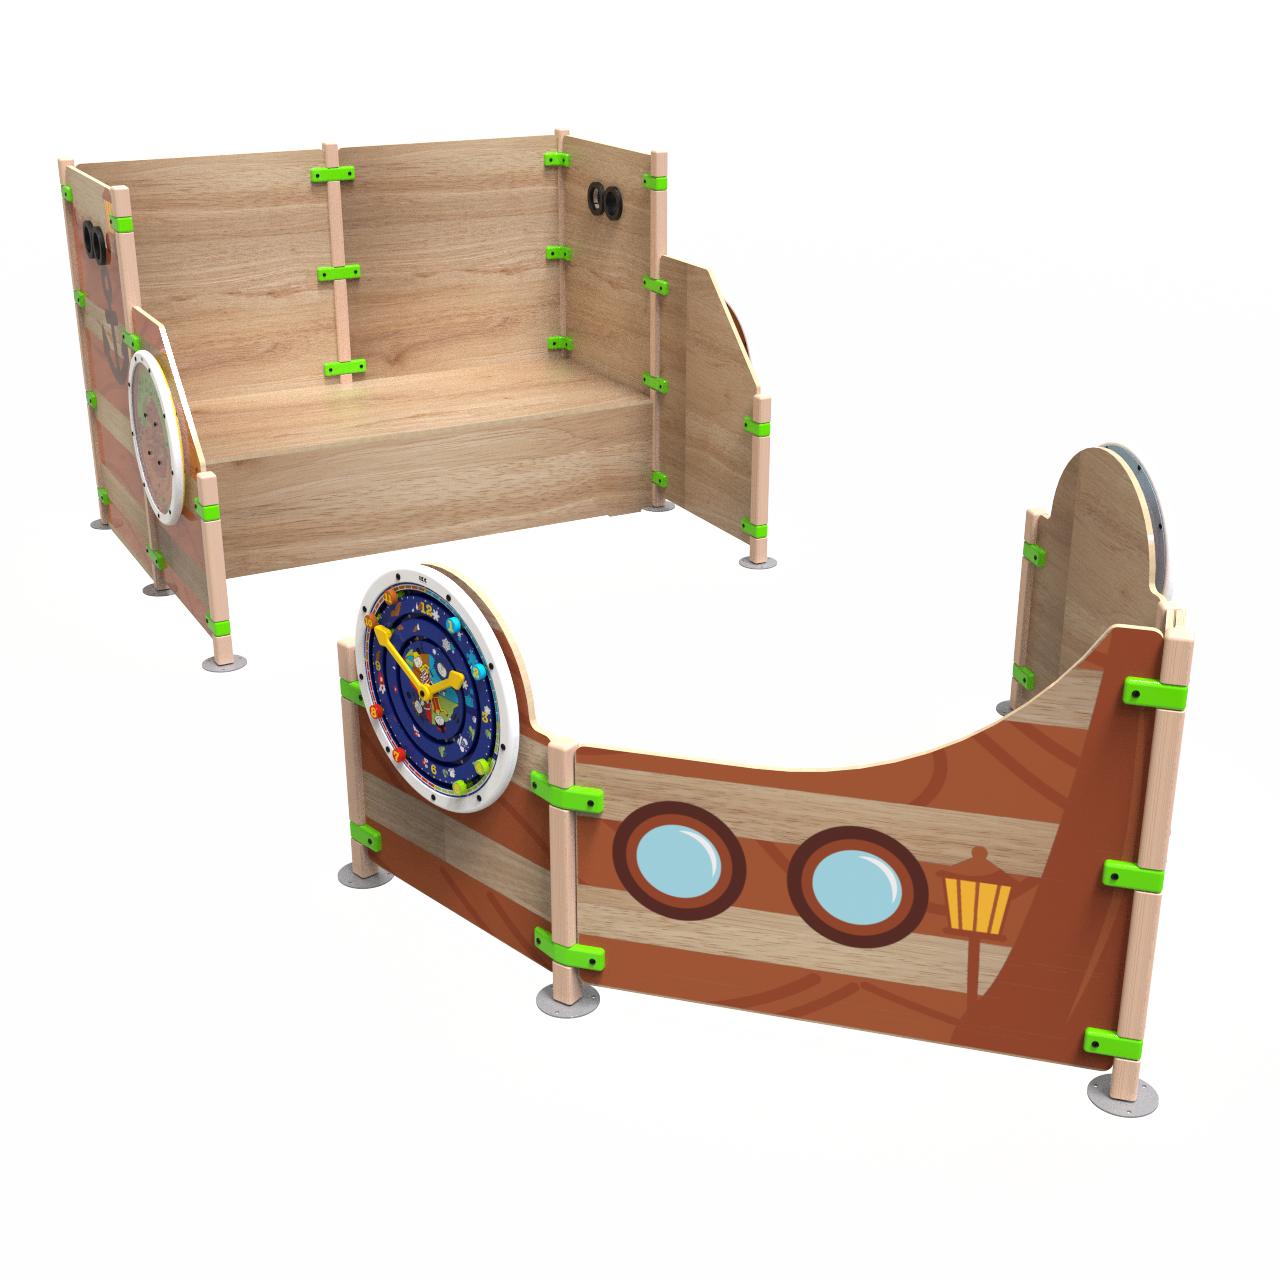 This image shows playhouse Ship ahoy